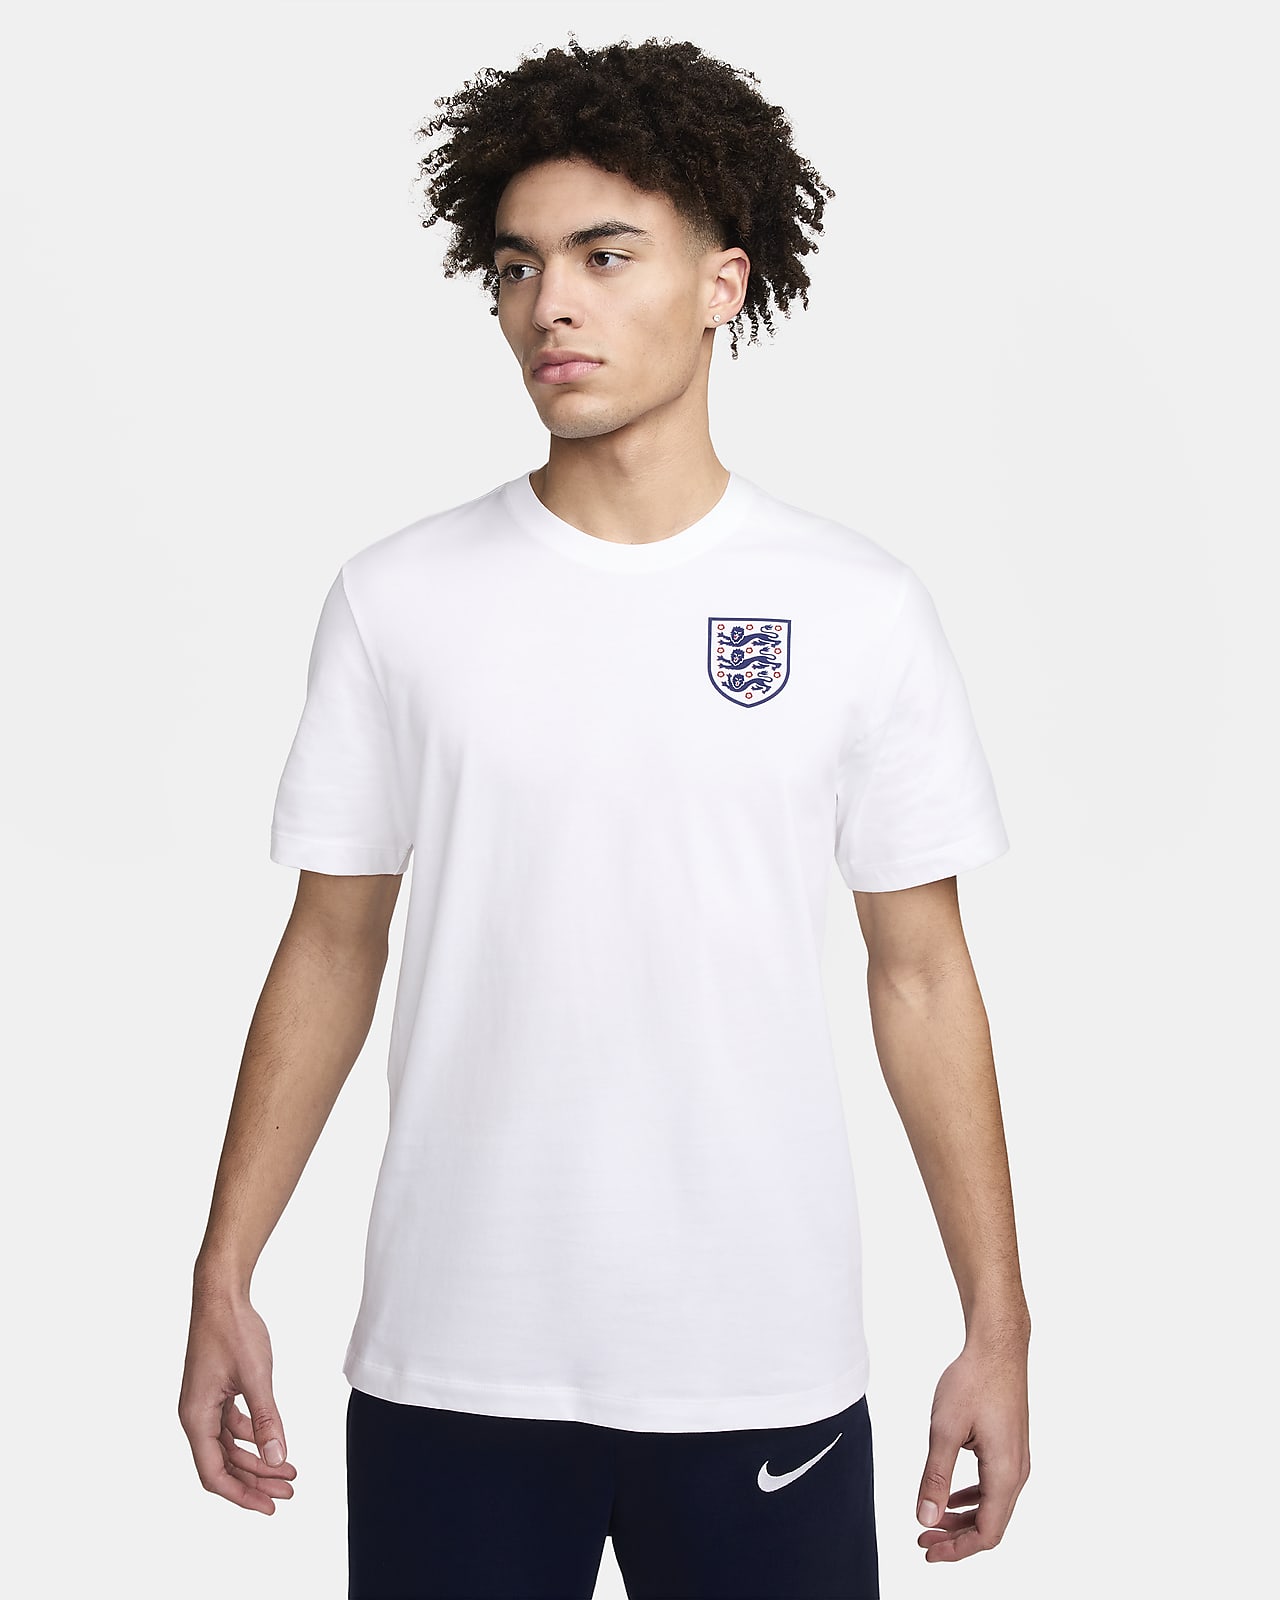 England Men's Nike Football T-Shirt